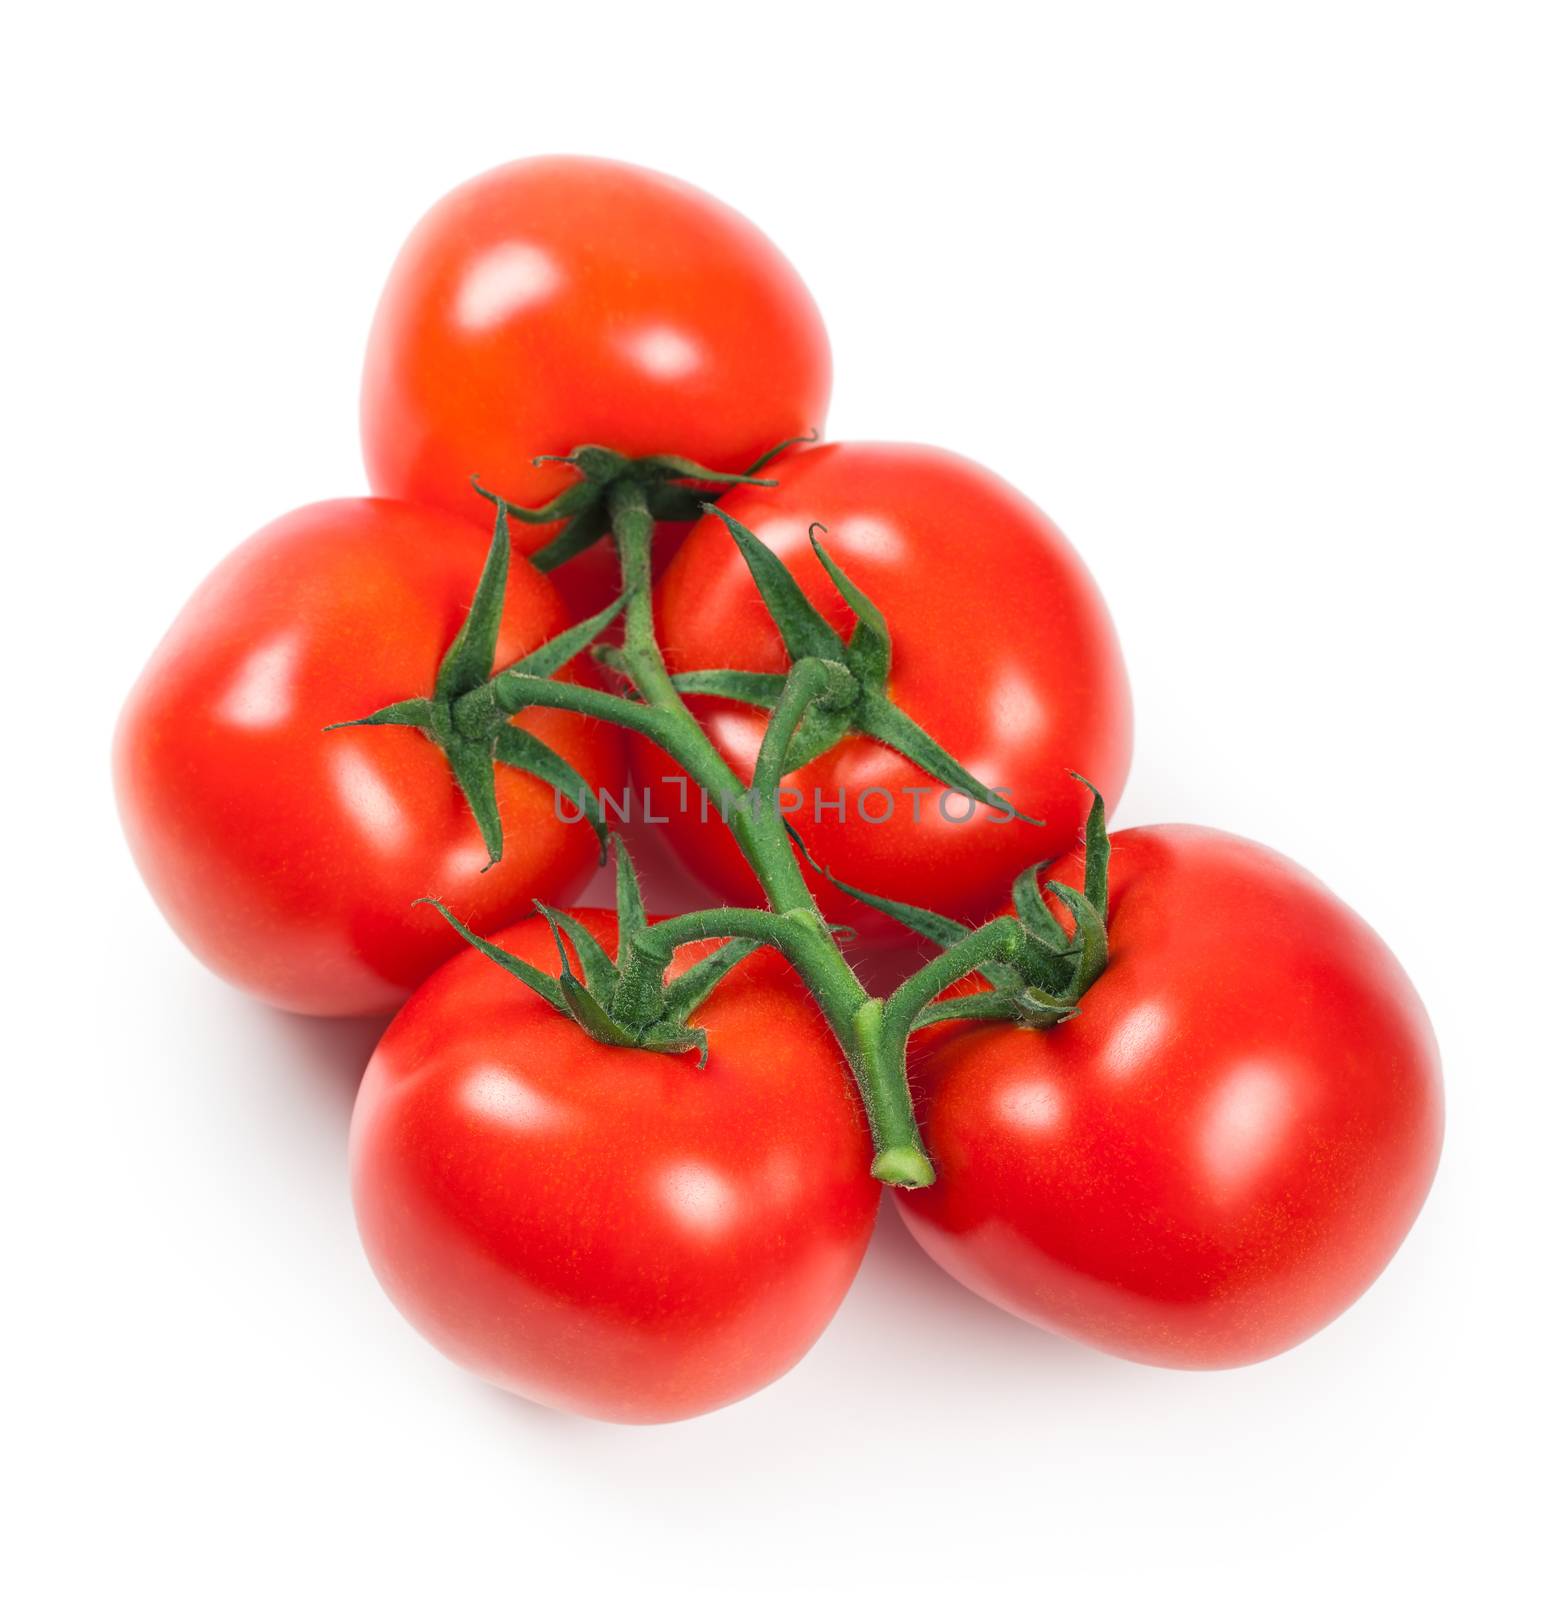 Tomatoes by bozena_fulawka